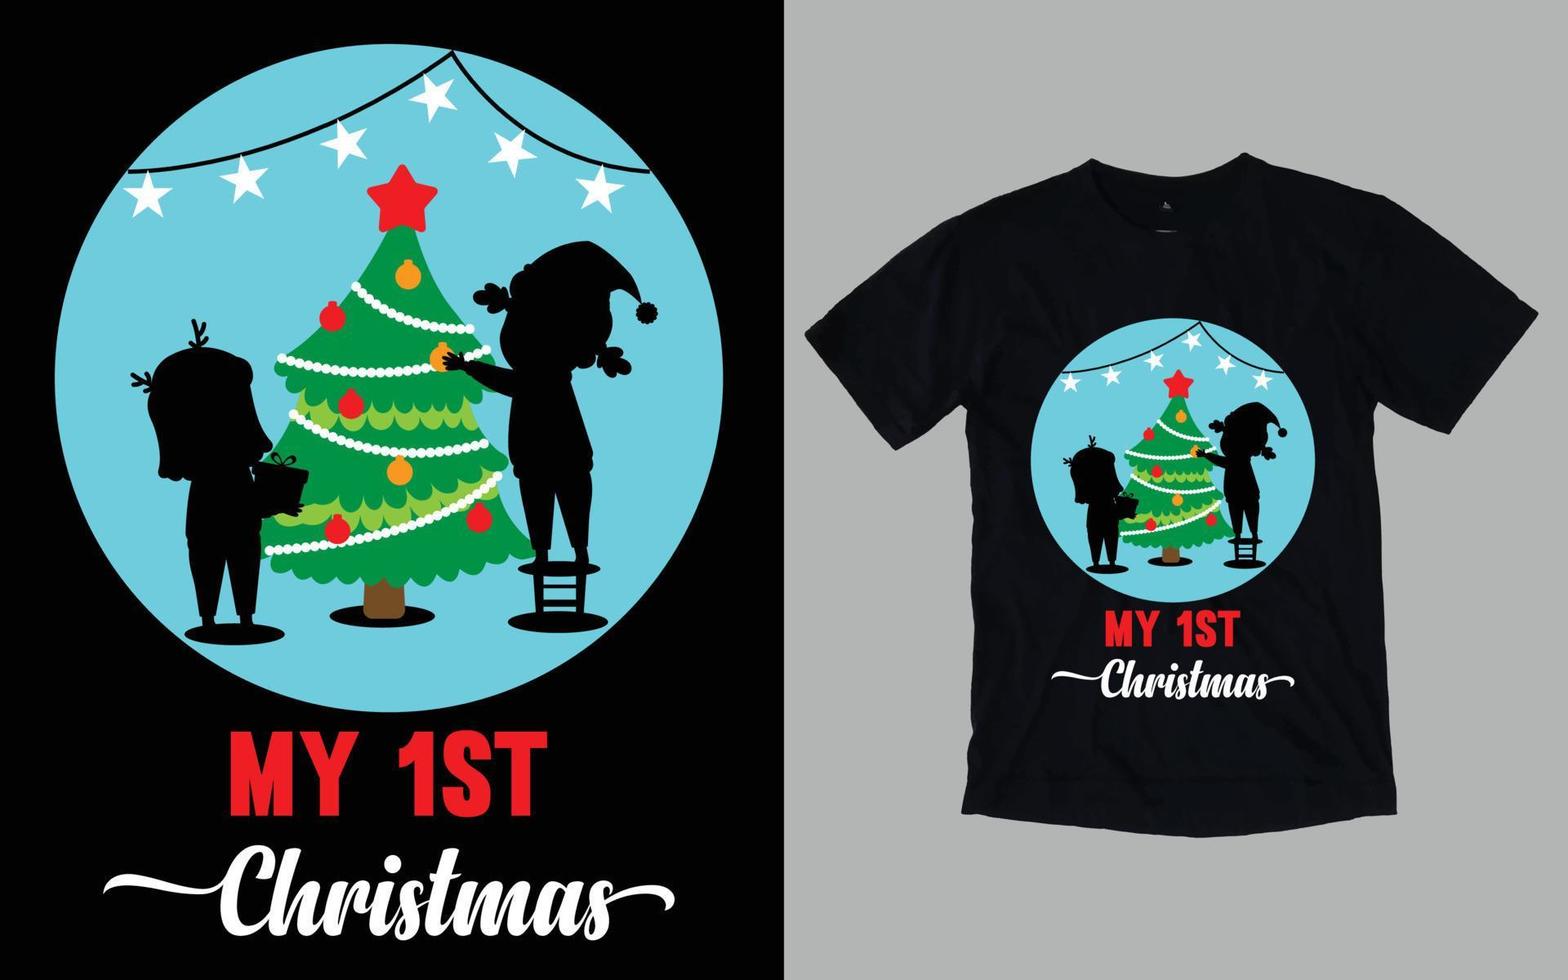 Christmas Day T shirt Design vector